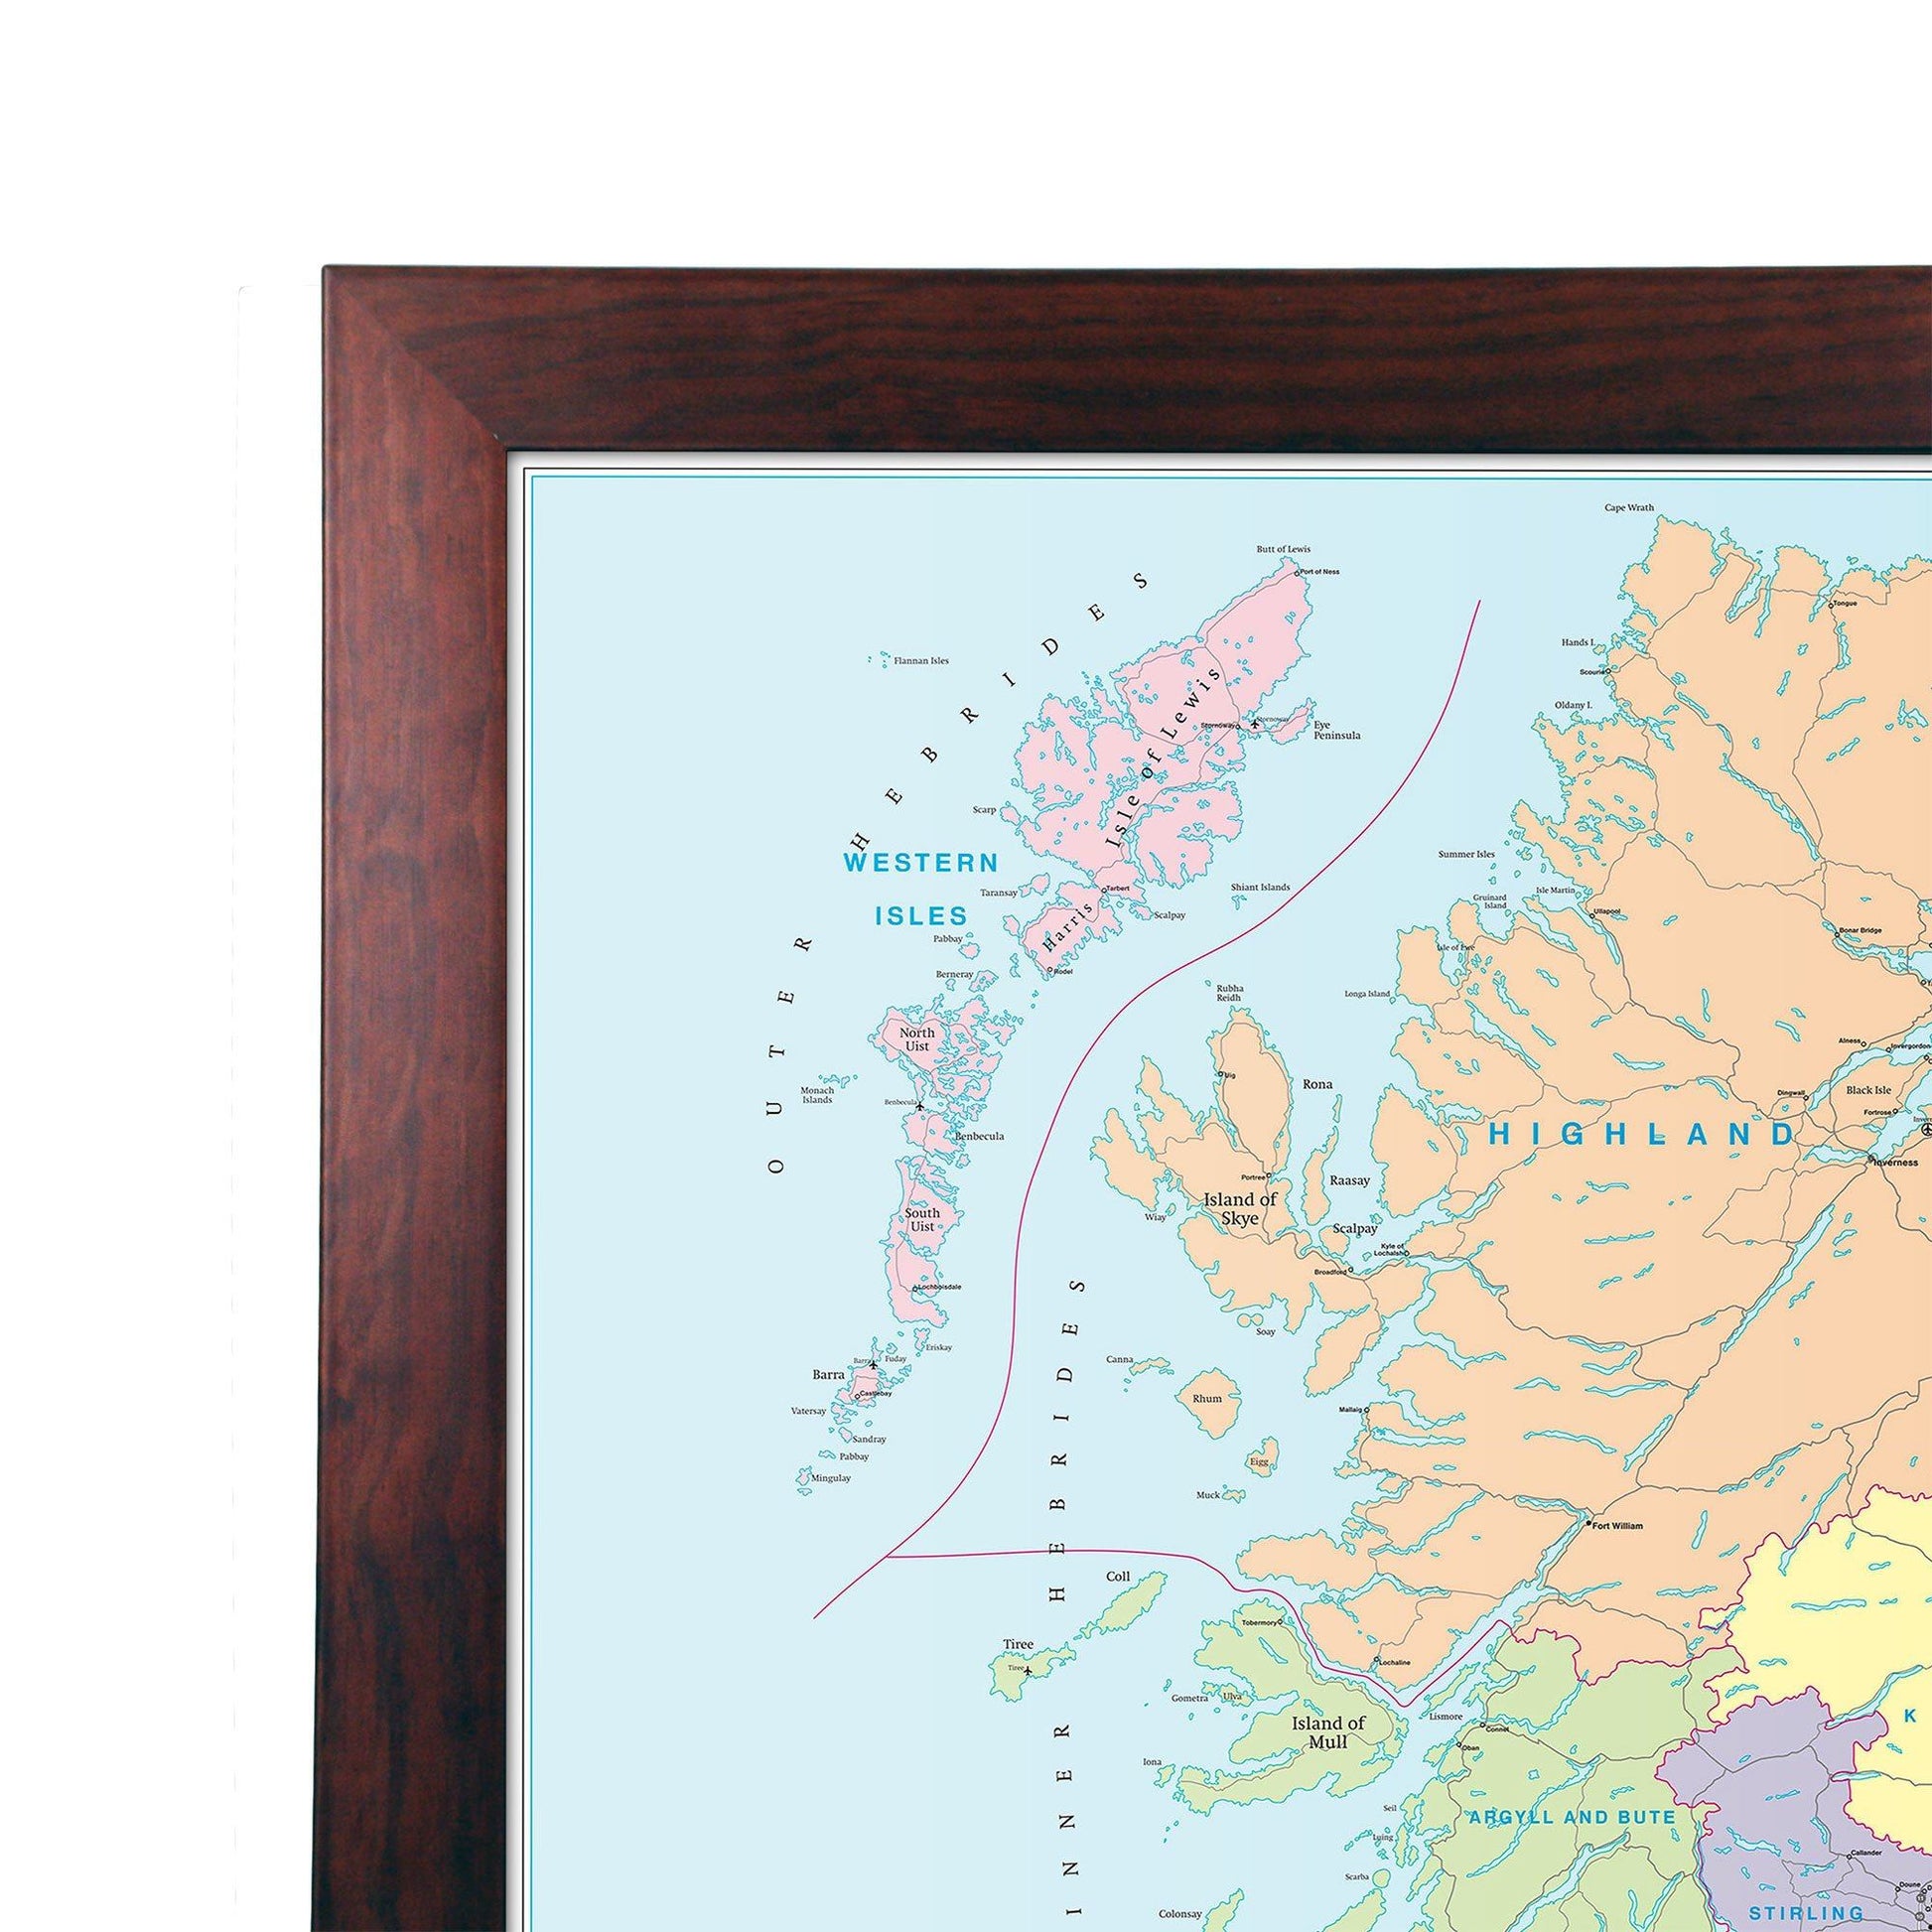 Wall Maps - John O'Groats, Shetlands And Orkneys Postcode Wall Map - Sector Map 35